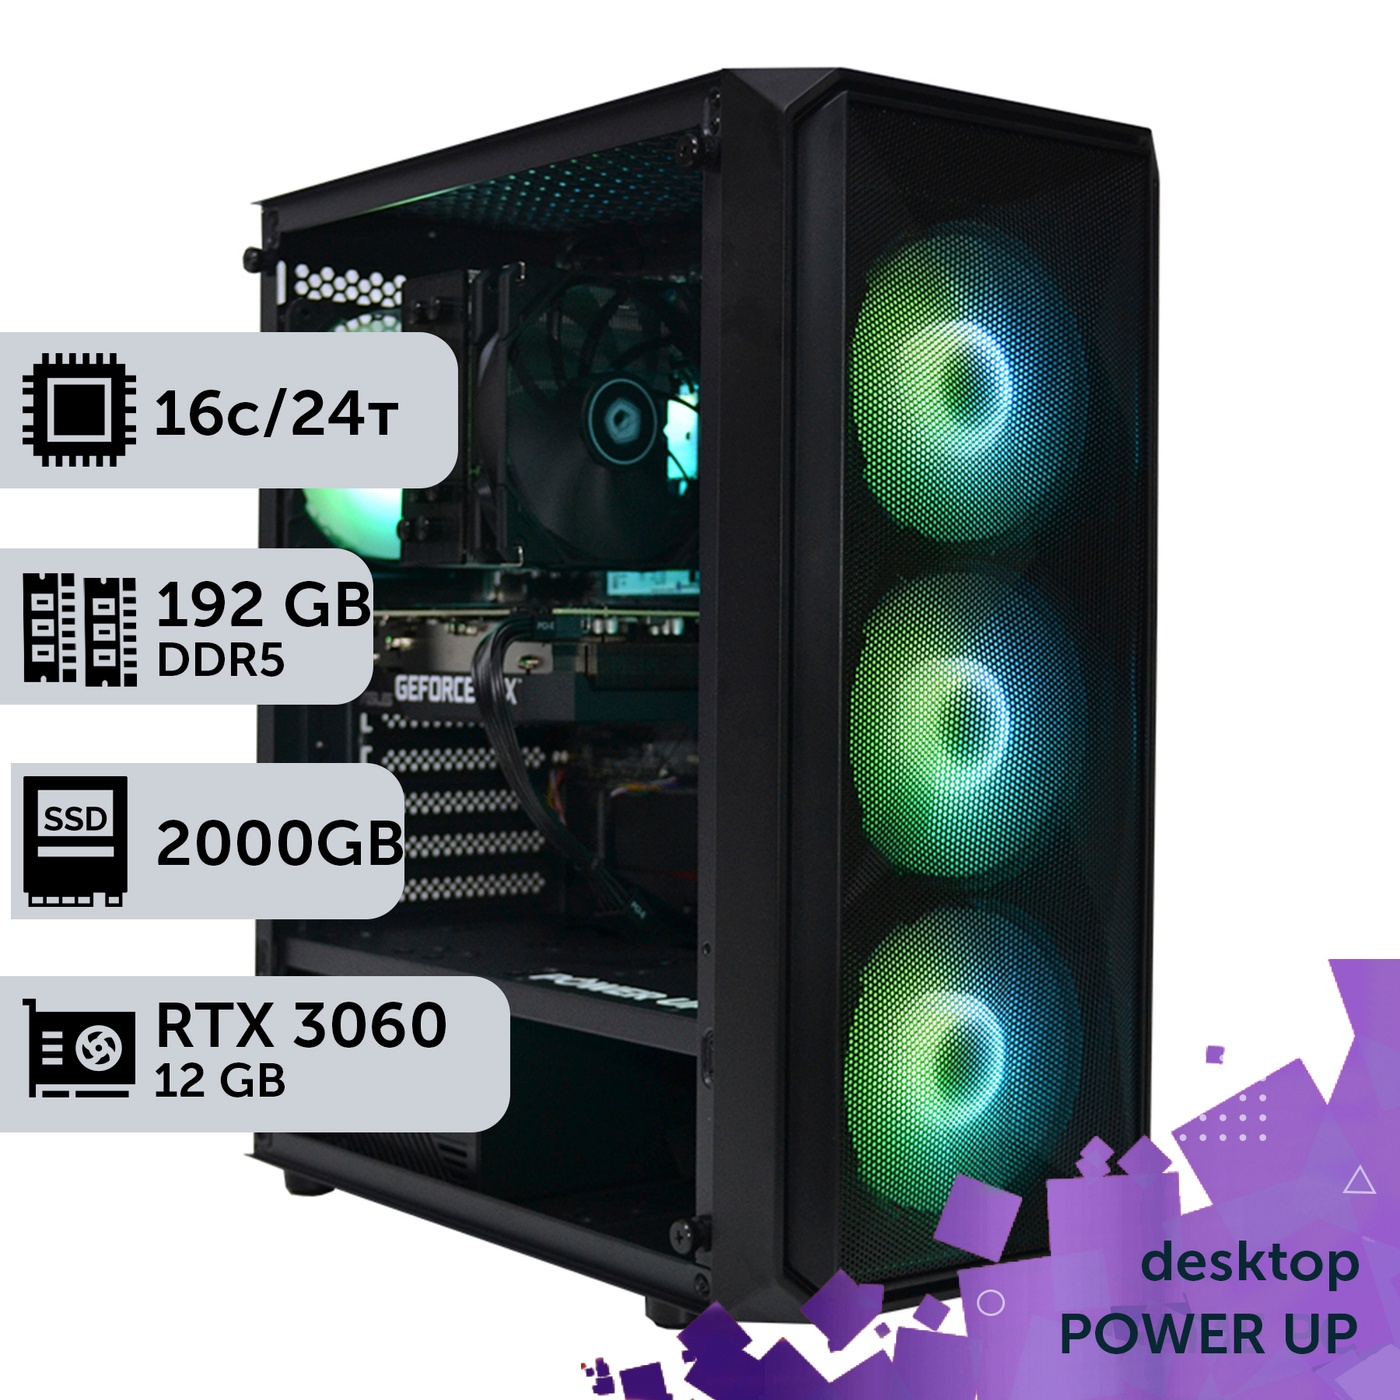 Рабочая станция PowerUp Desktop #275 Core i7 13700K/192 GB/SSD 2TB/GeForce RTX 3060 12GB